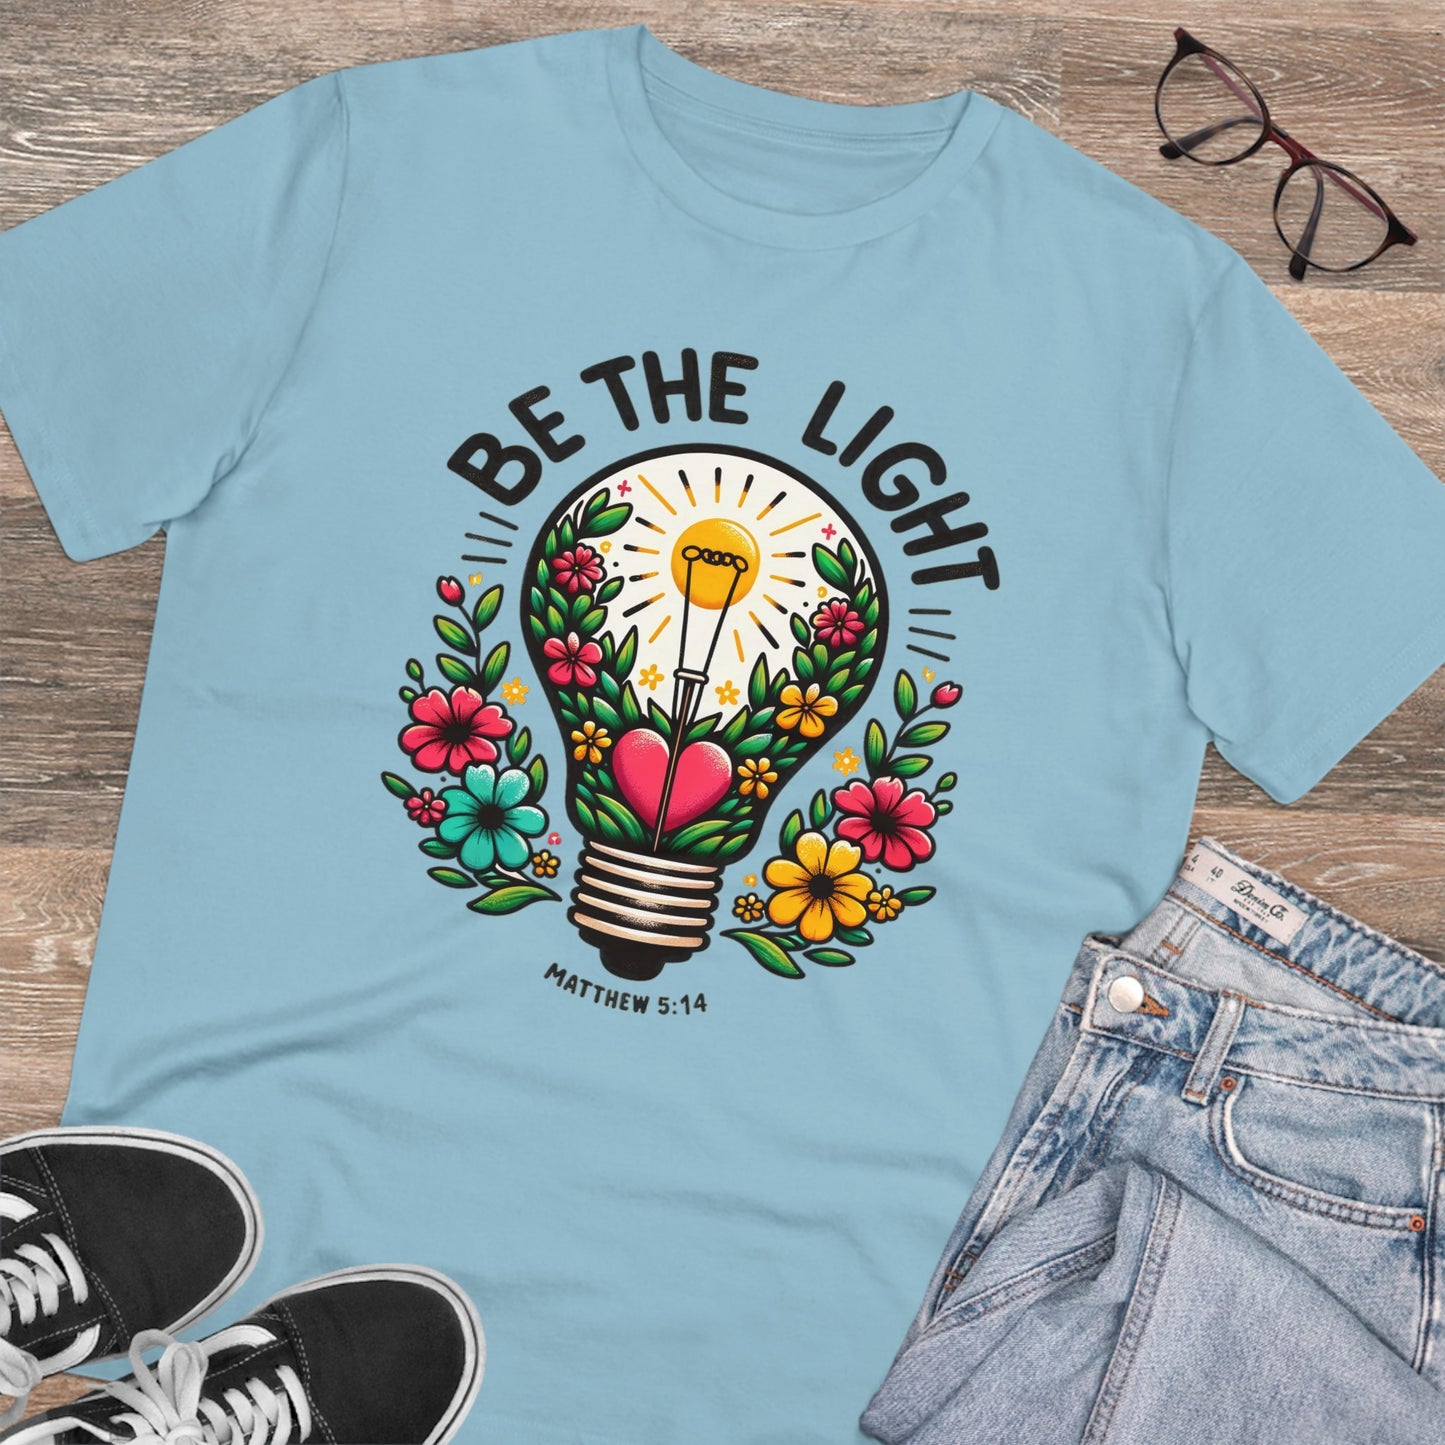 Be the light - Matthew 5:14 - Organic Unisex T-shirt